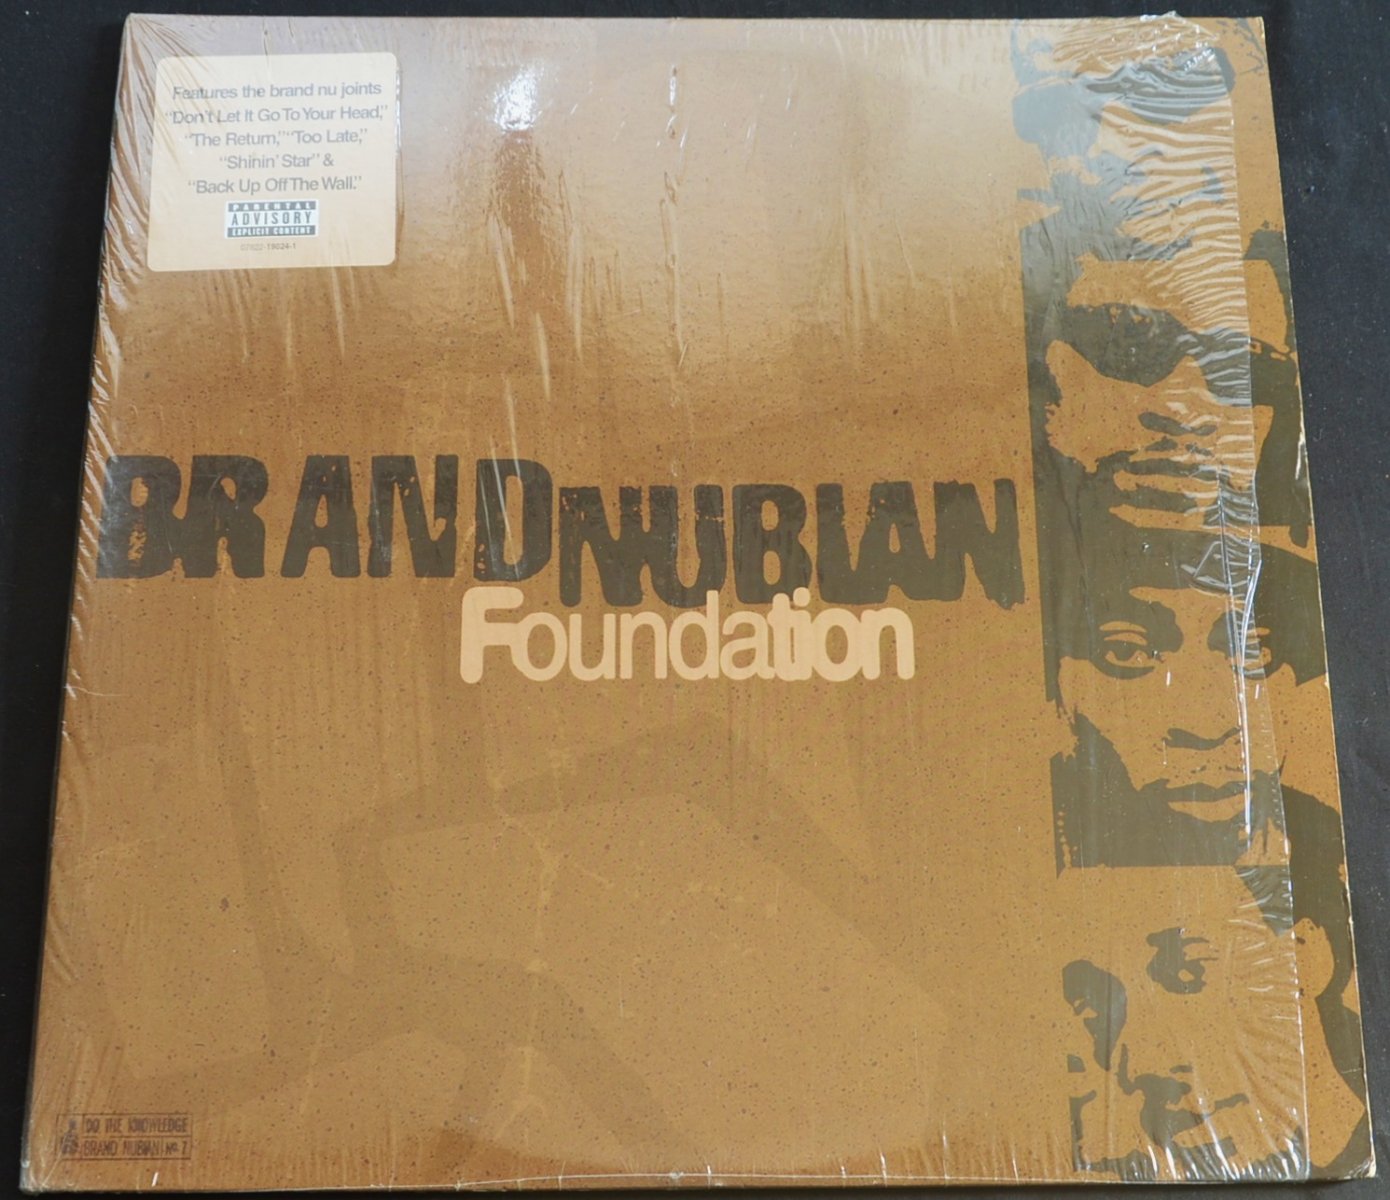 Brand Nubian - Foundation